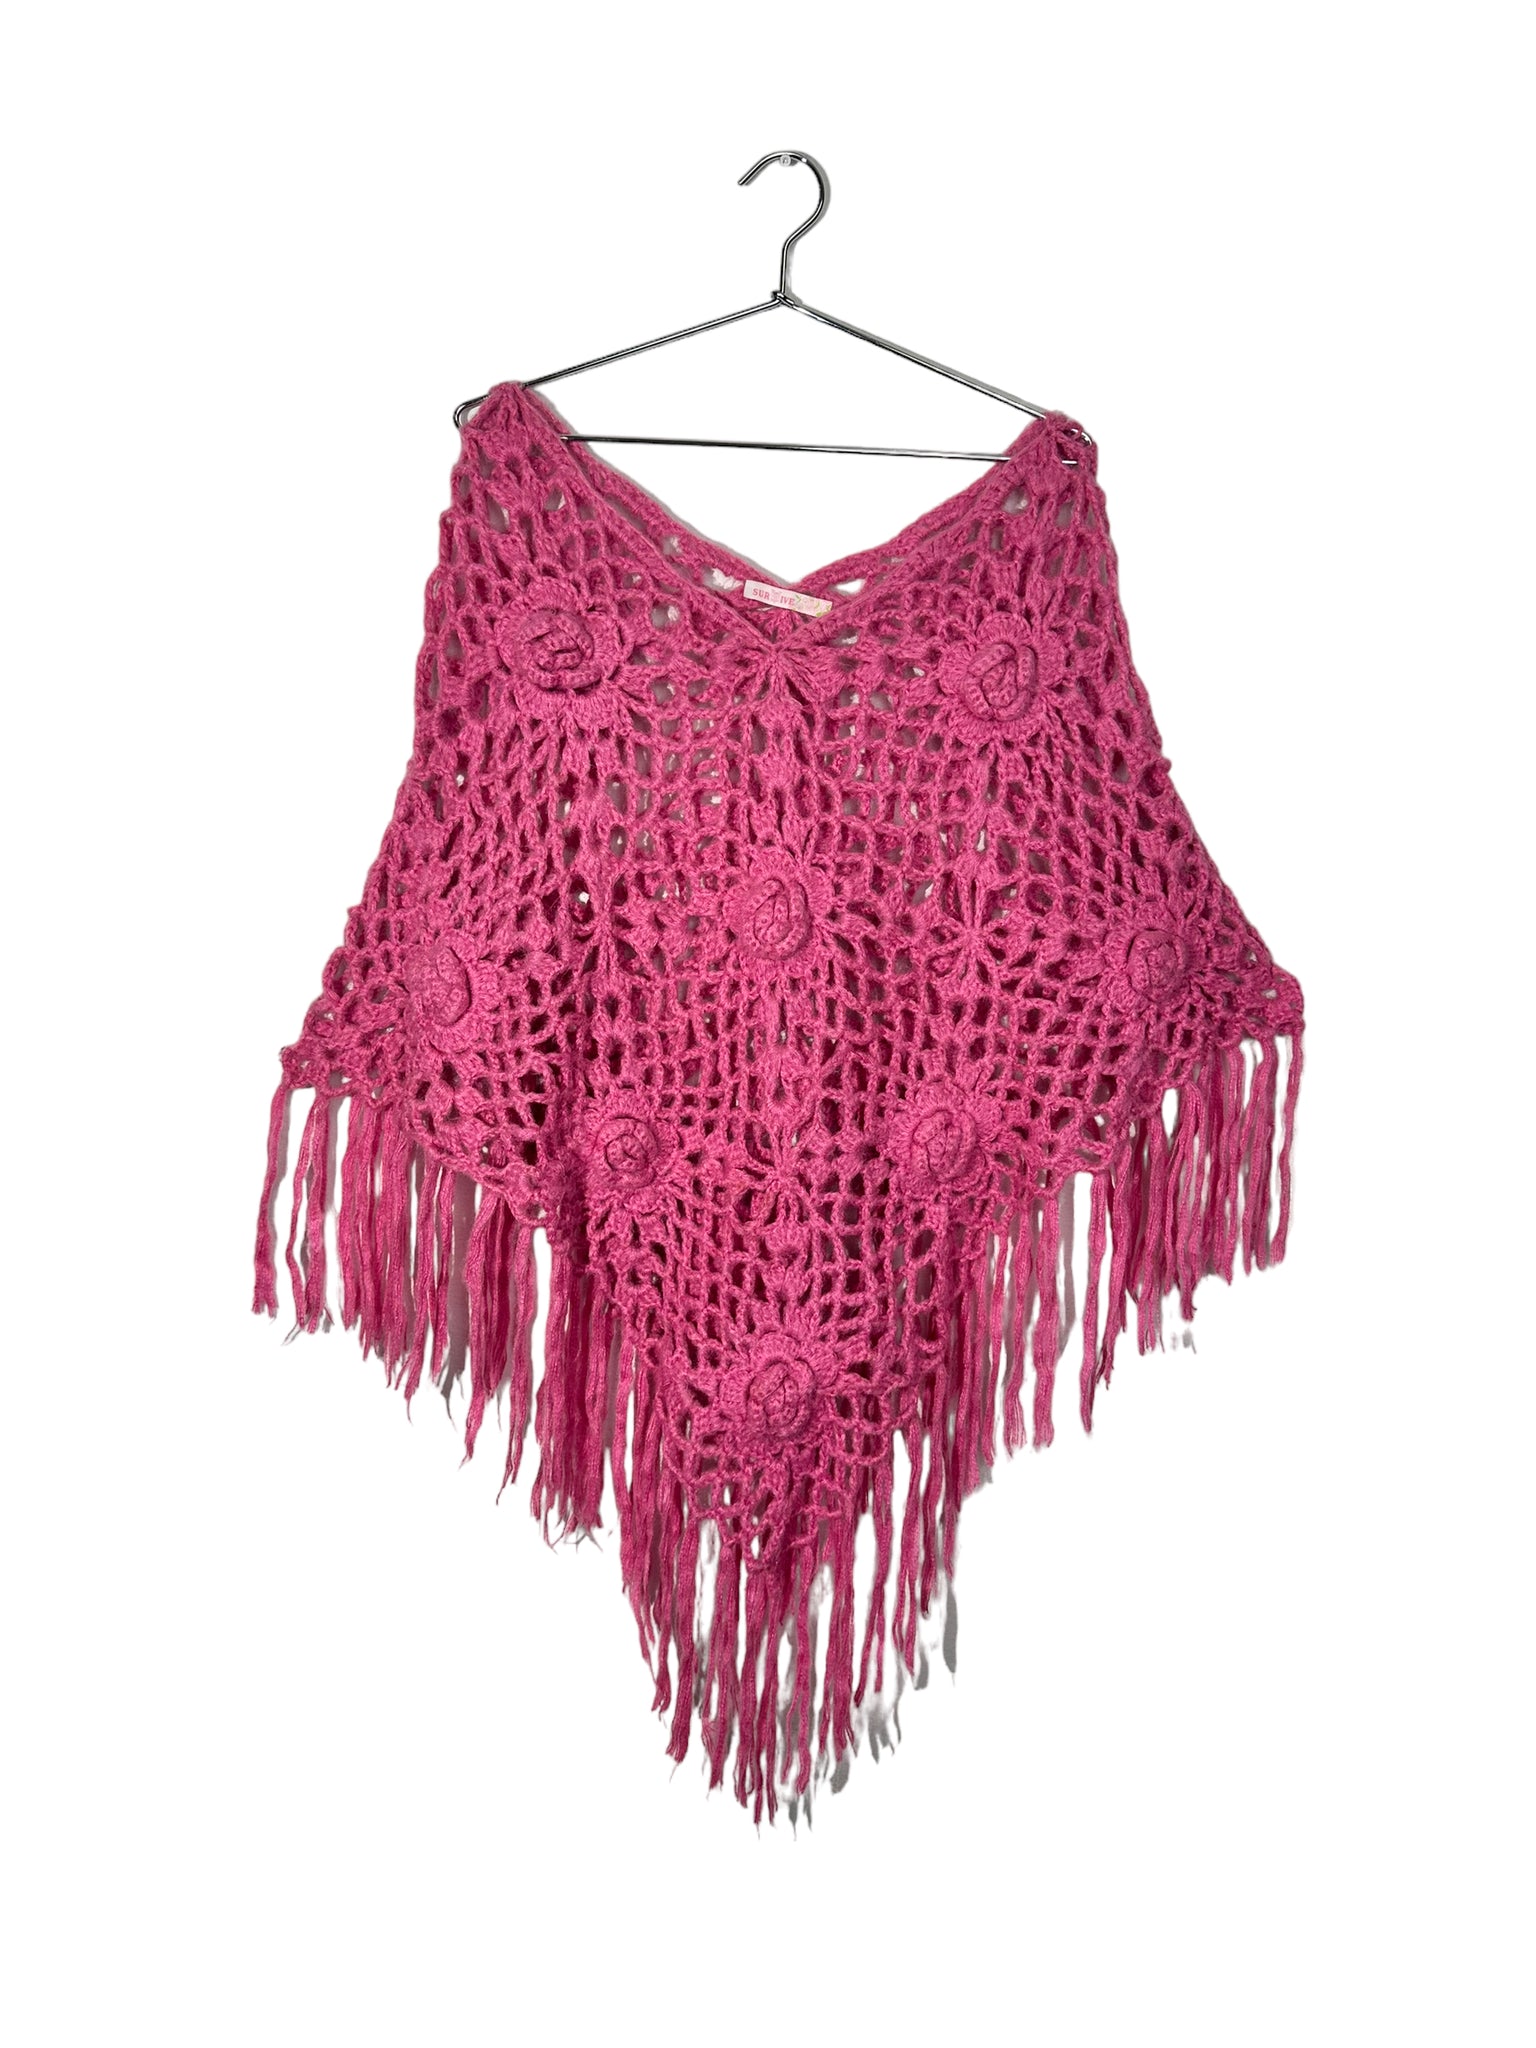 Chunky Pink Rose Crochet Shawl